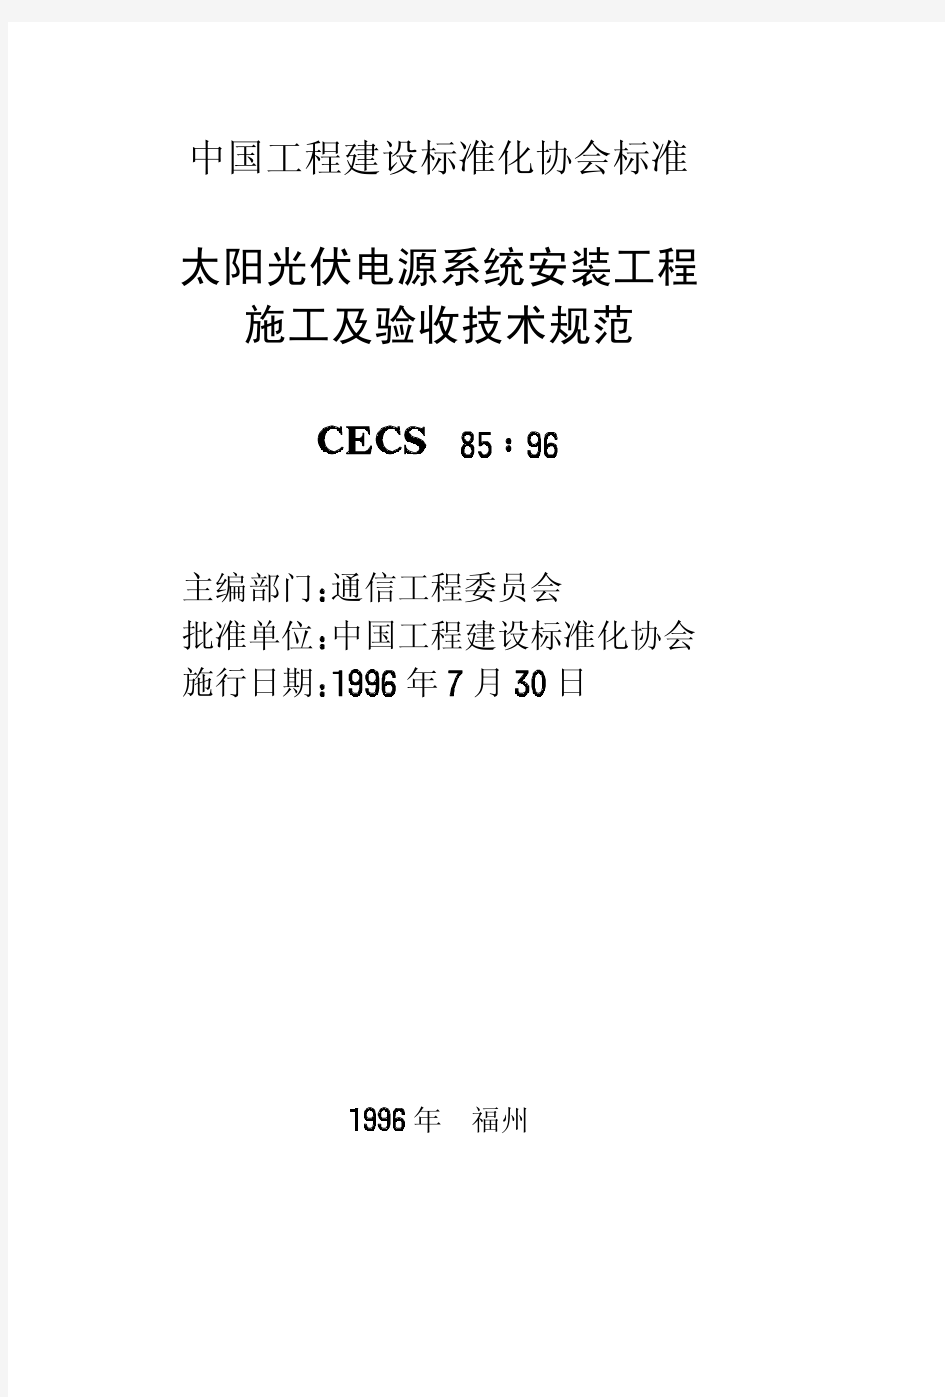 CECS85-96太阳光伏电源系统安装工程施工及验收技术规范